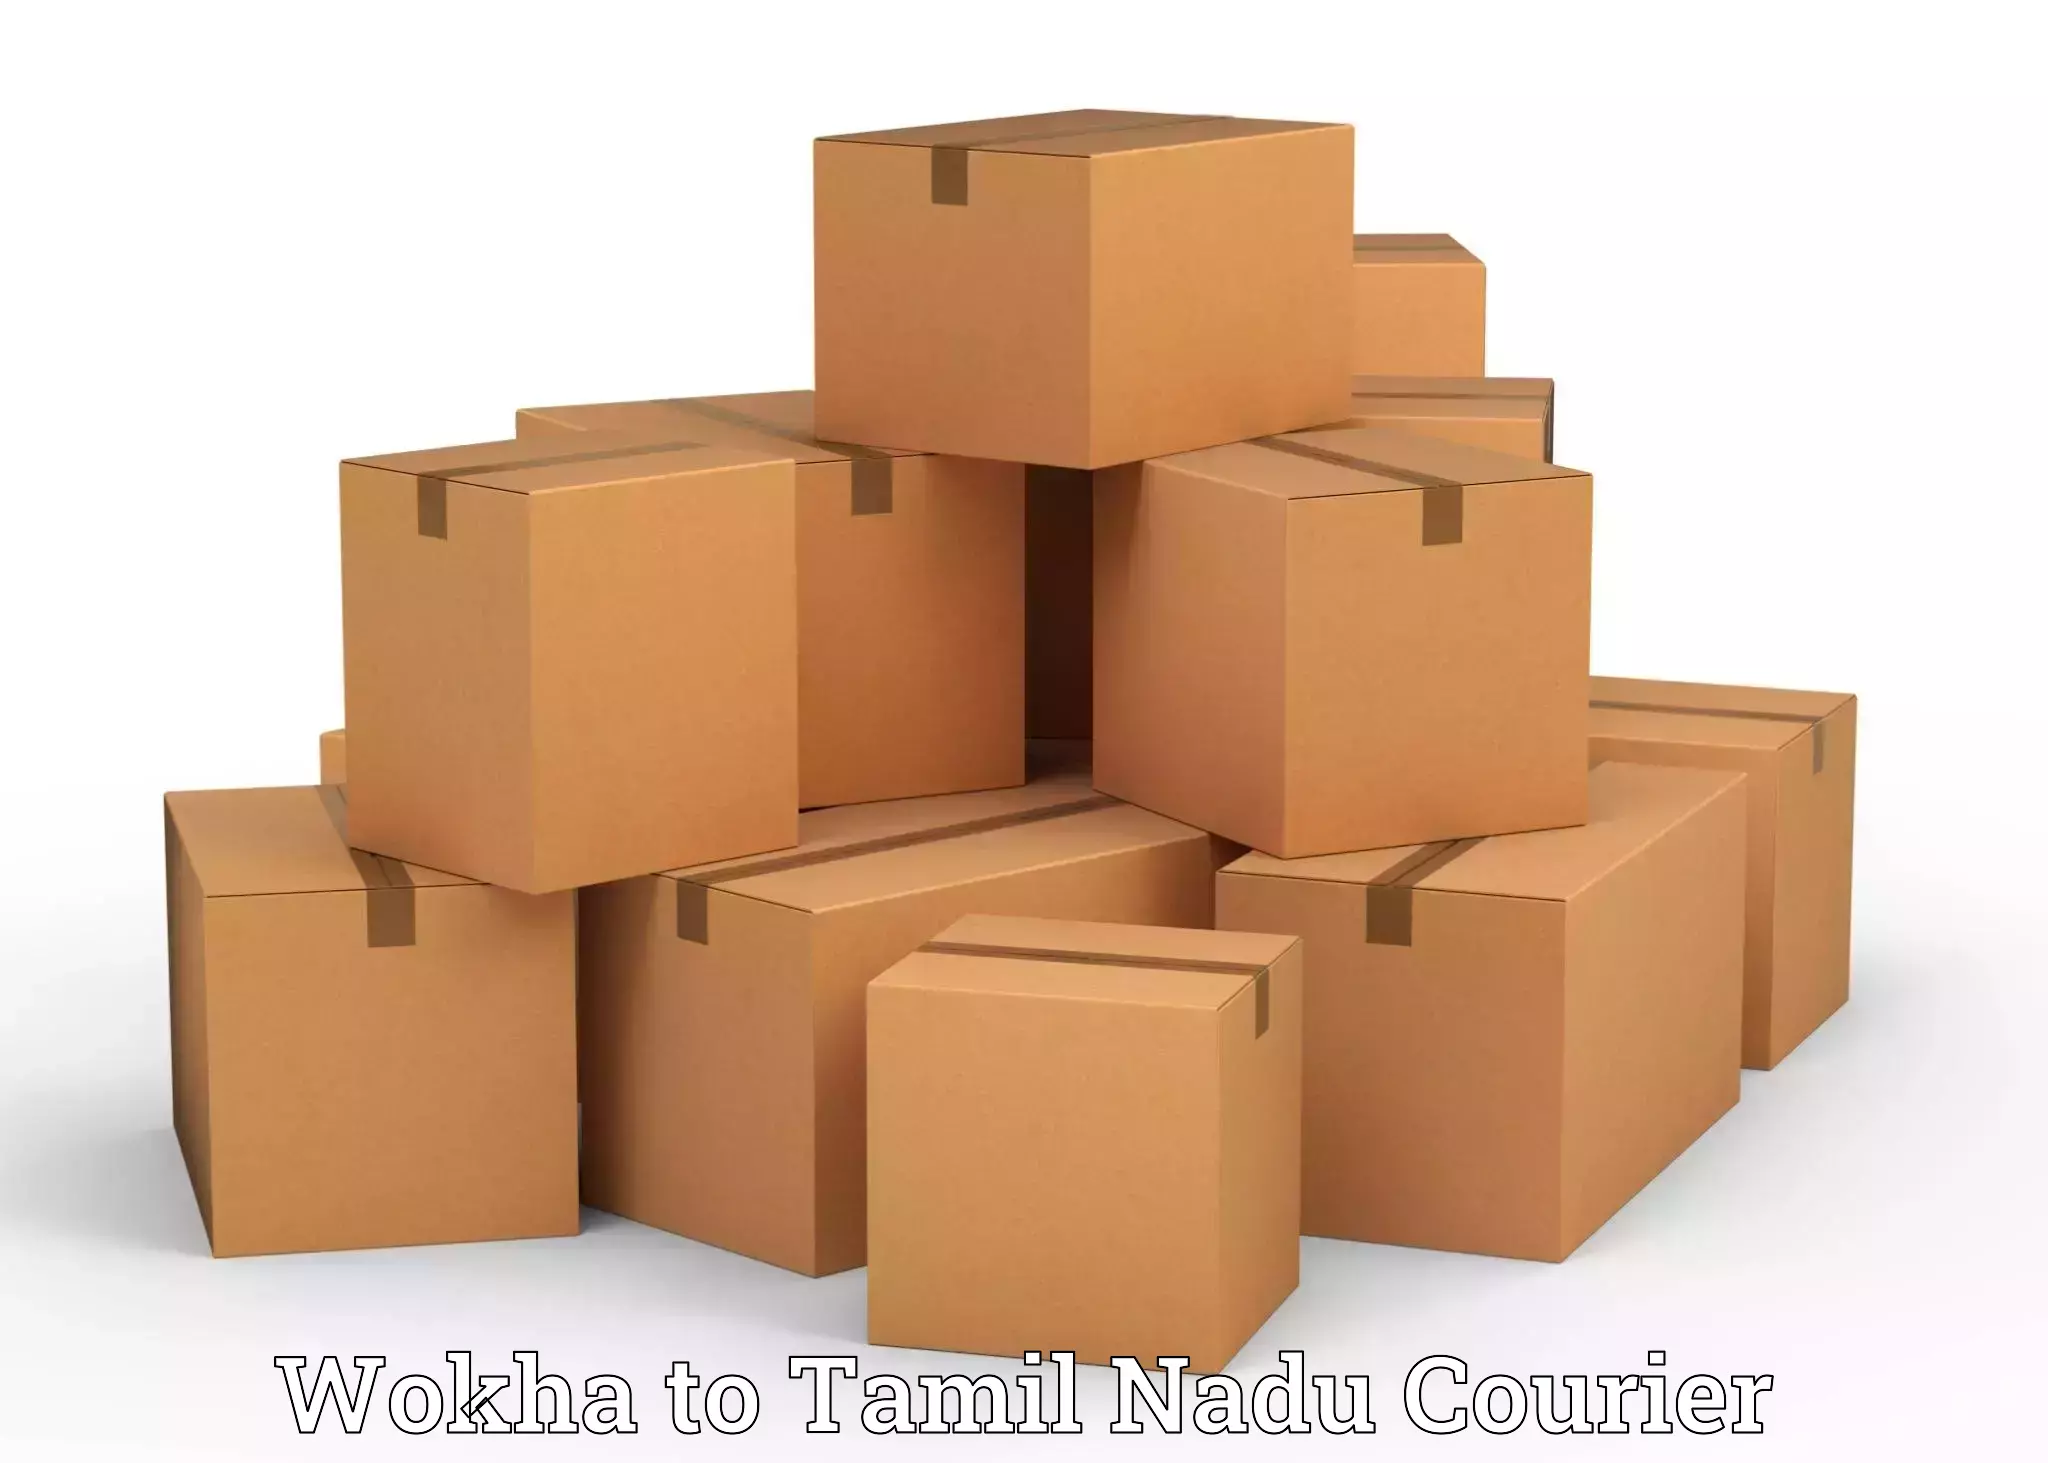 Professional moving company Wokha to Tamil Nadu